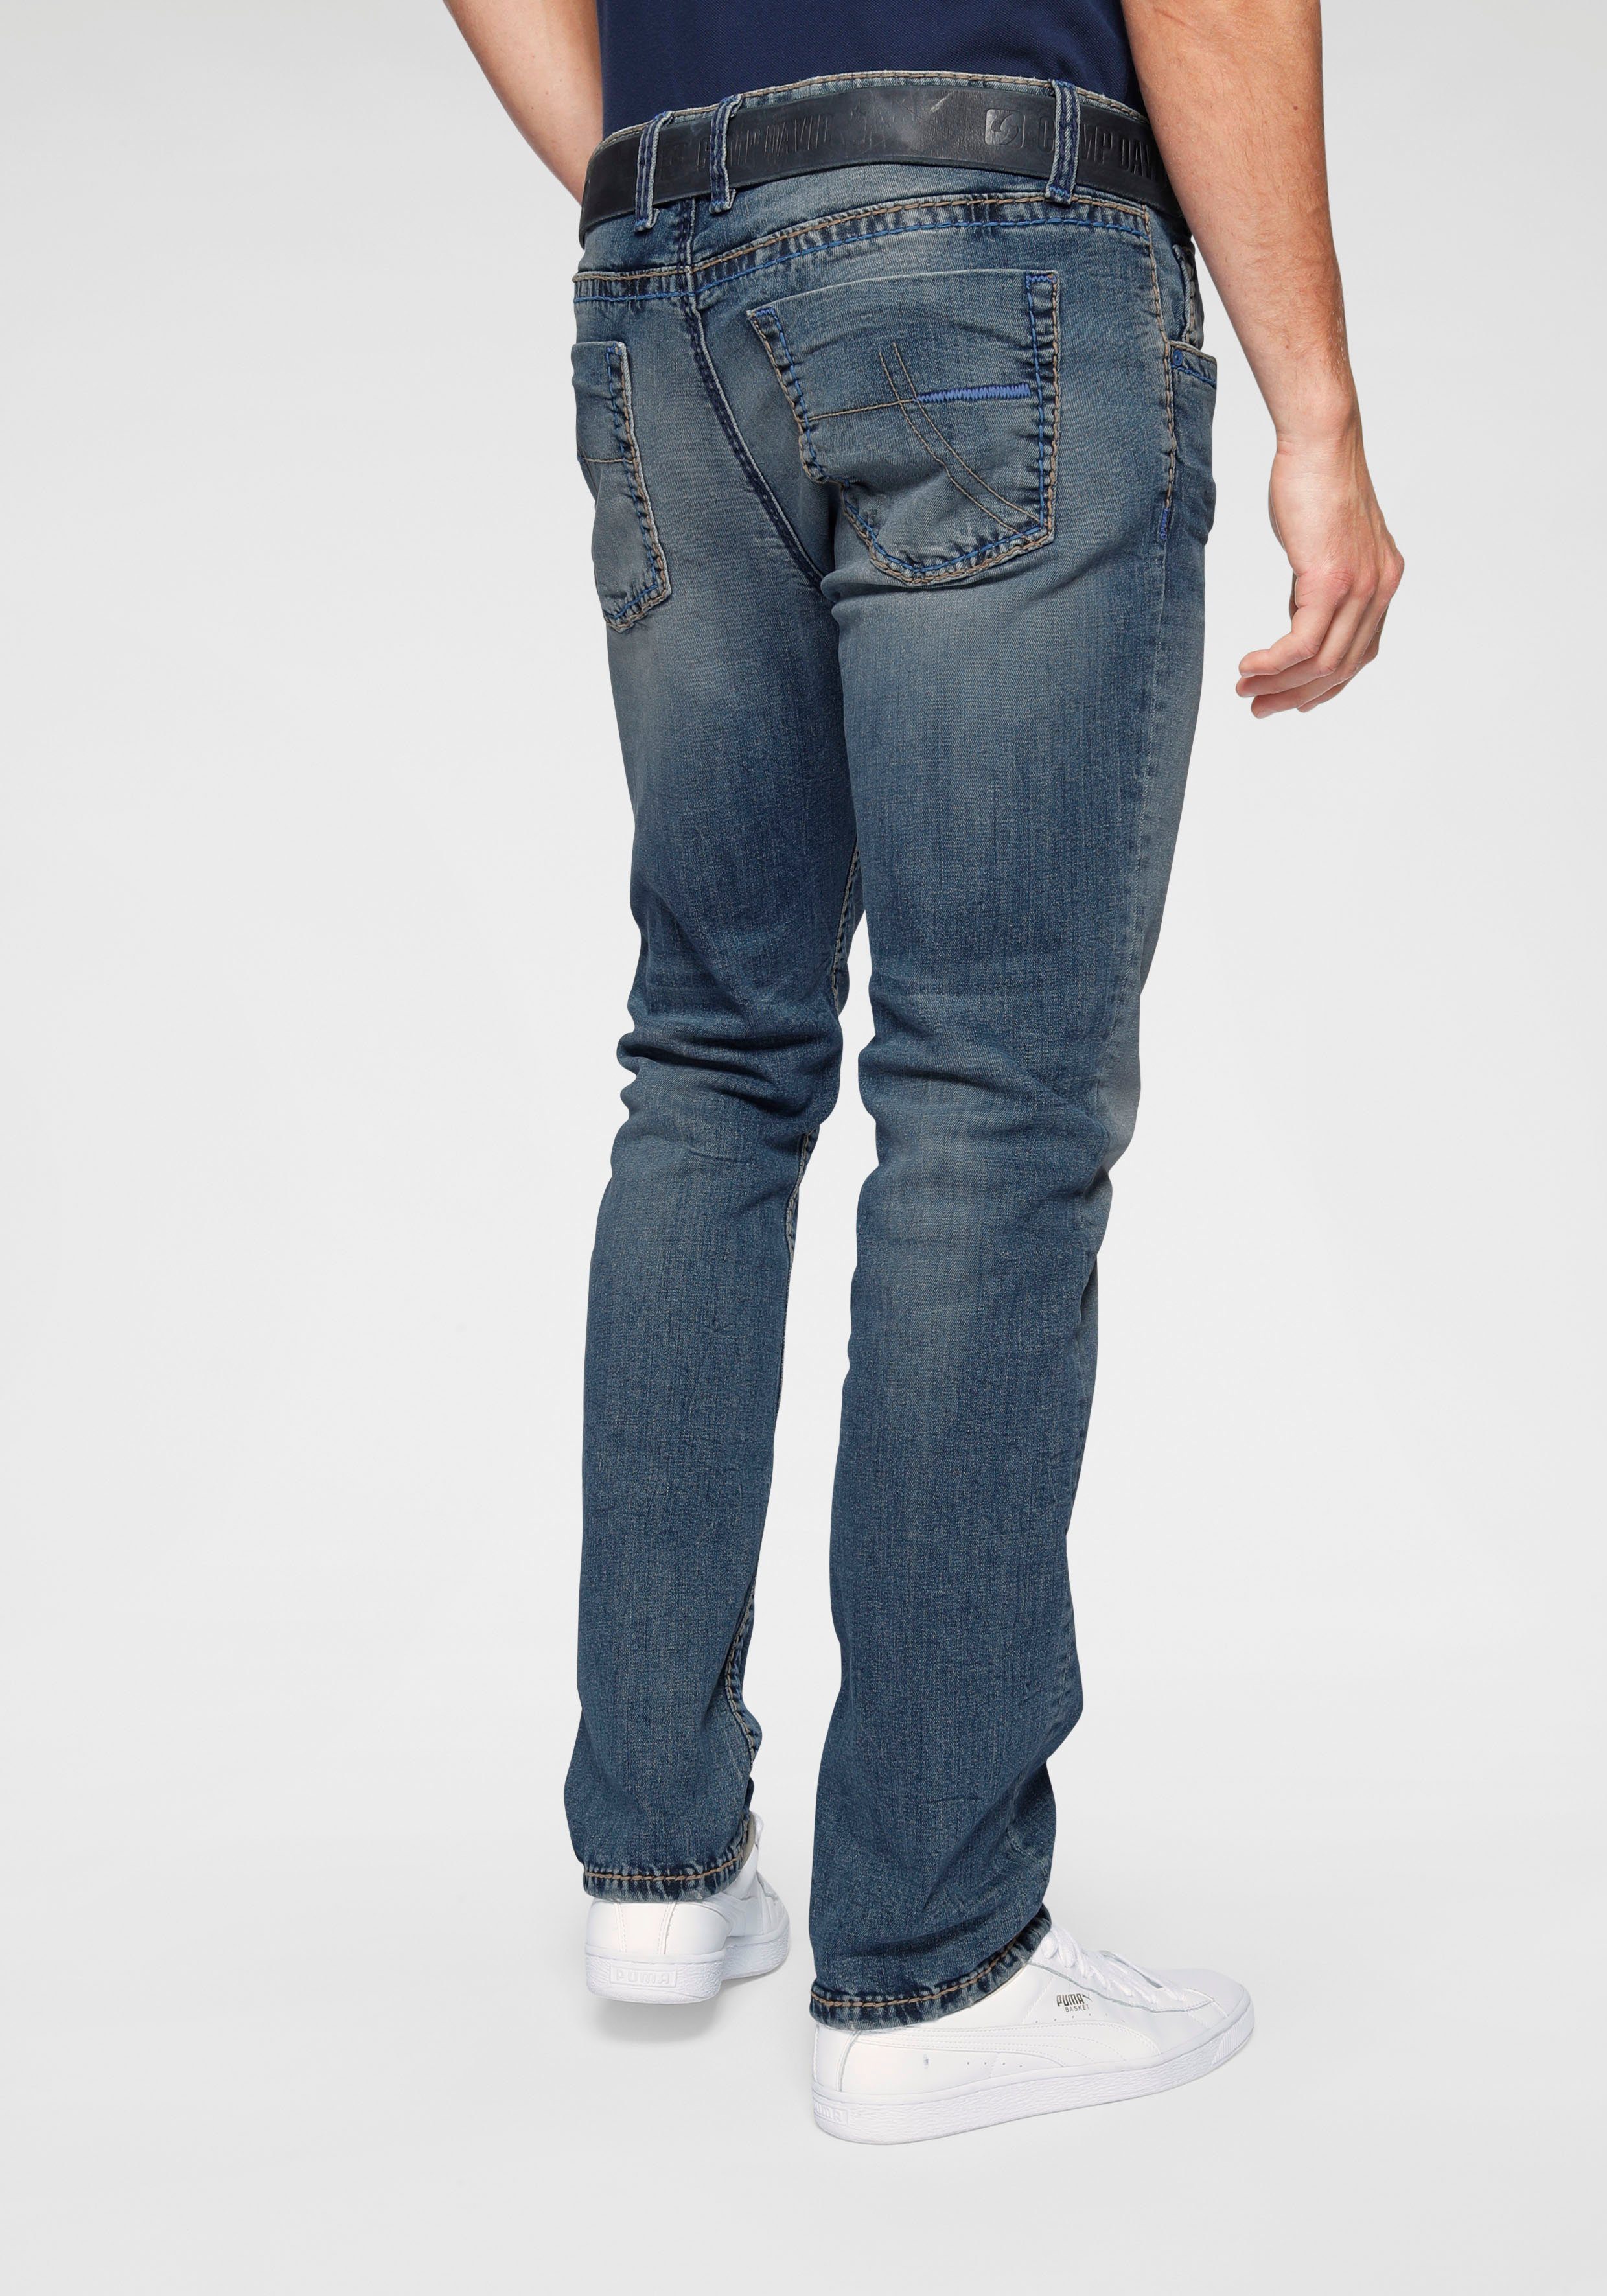 CAMP DAVID Straight-Jeans NI:CO:R611 mit markanten Steppnähten dark-used-vintage